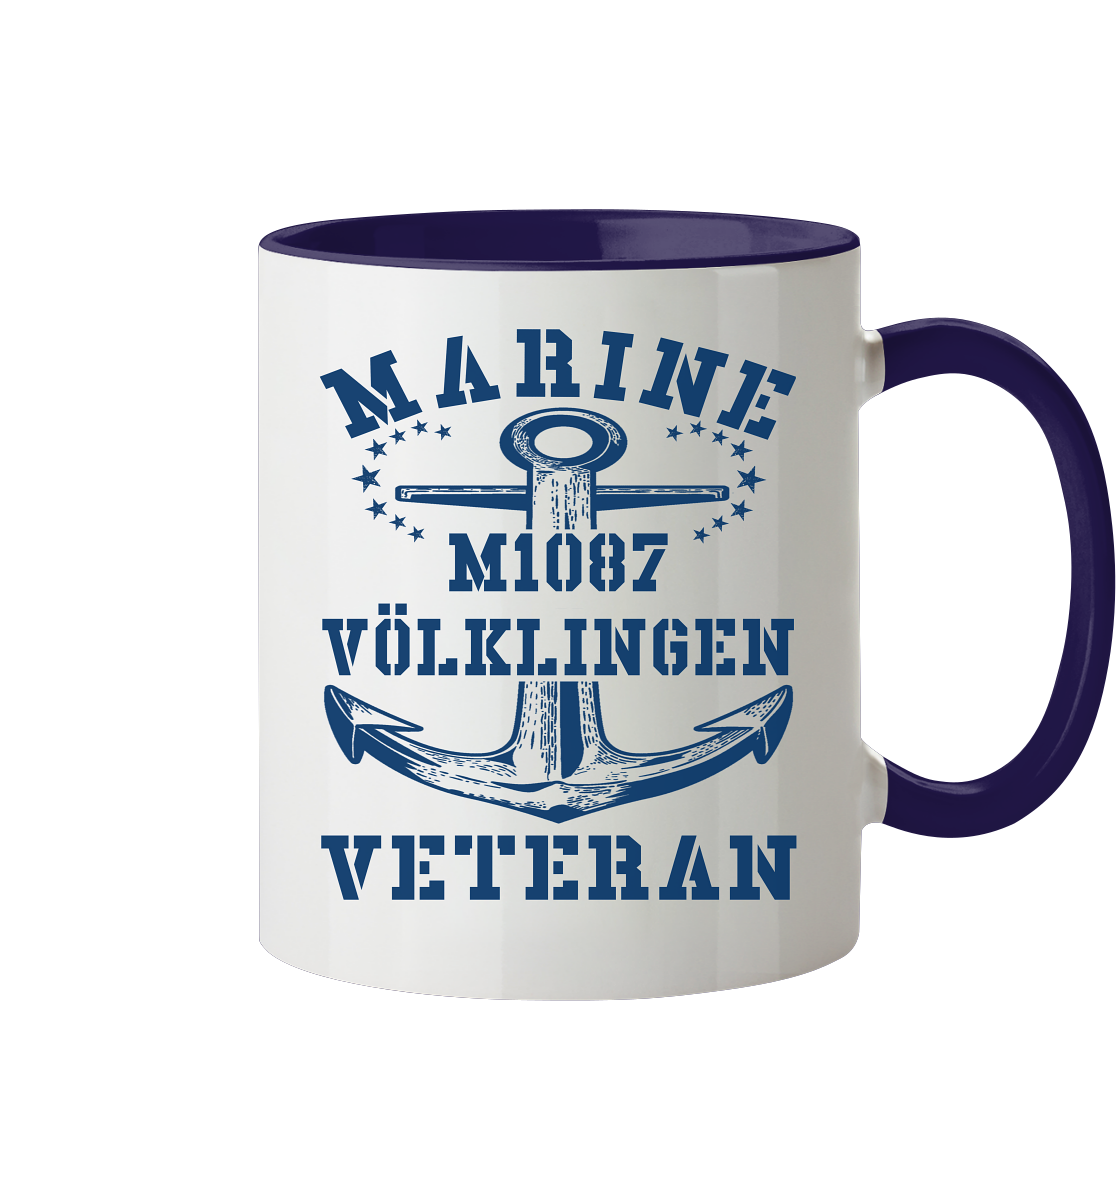 Marine Veteran M1087 VÖLKLINGEN - Tasse zweifarbig